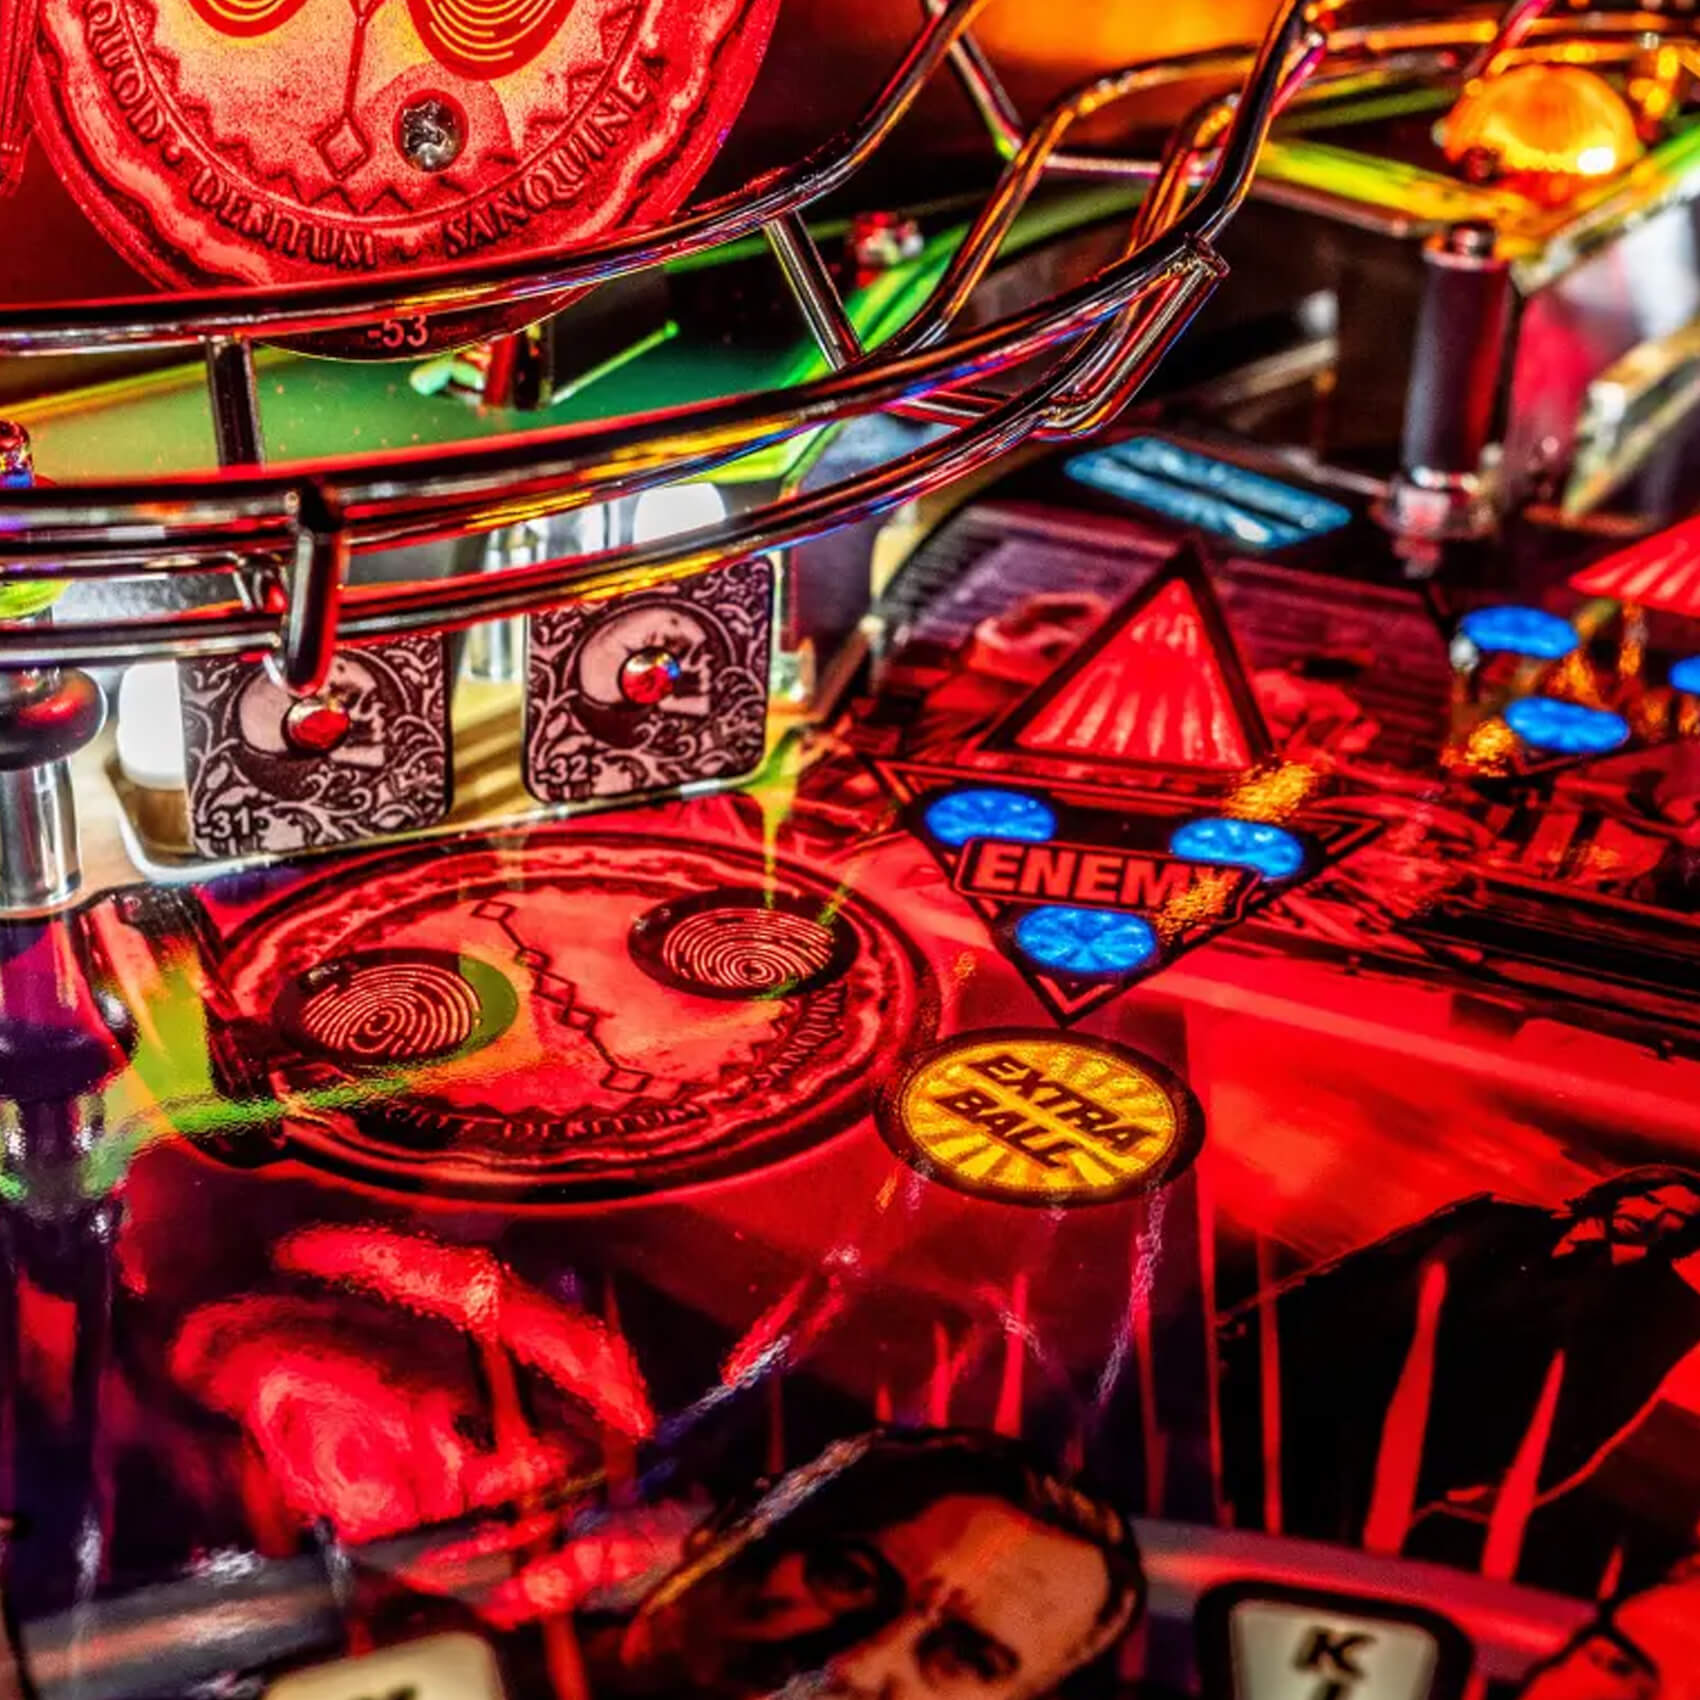 2024 John Wick LE Pinball Machine by Stern